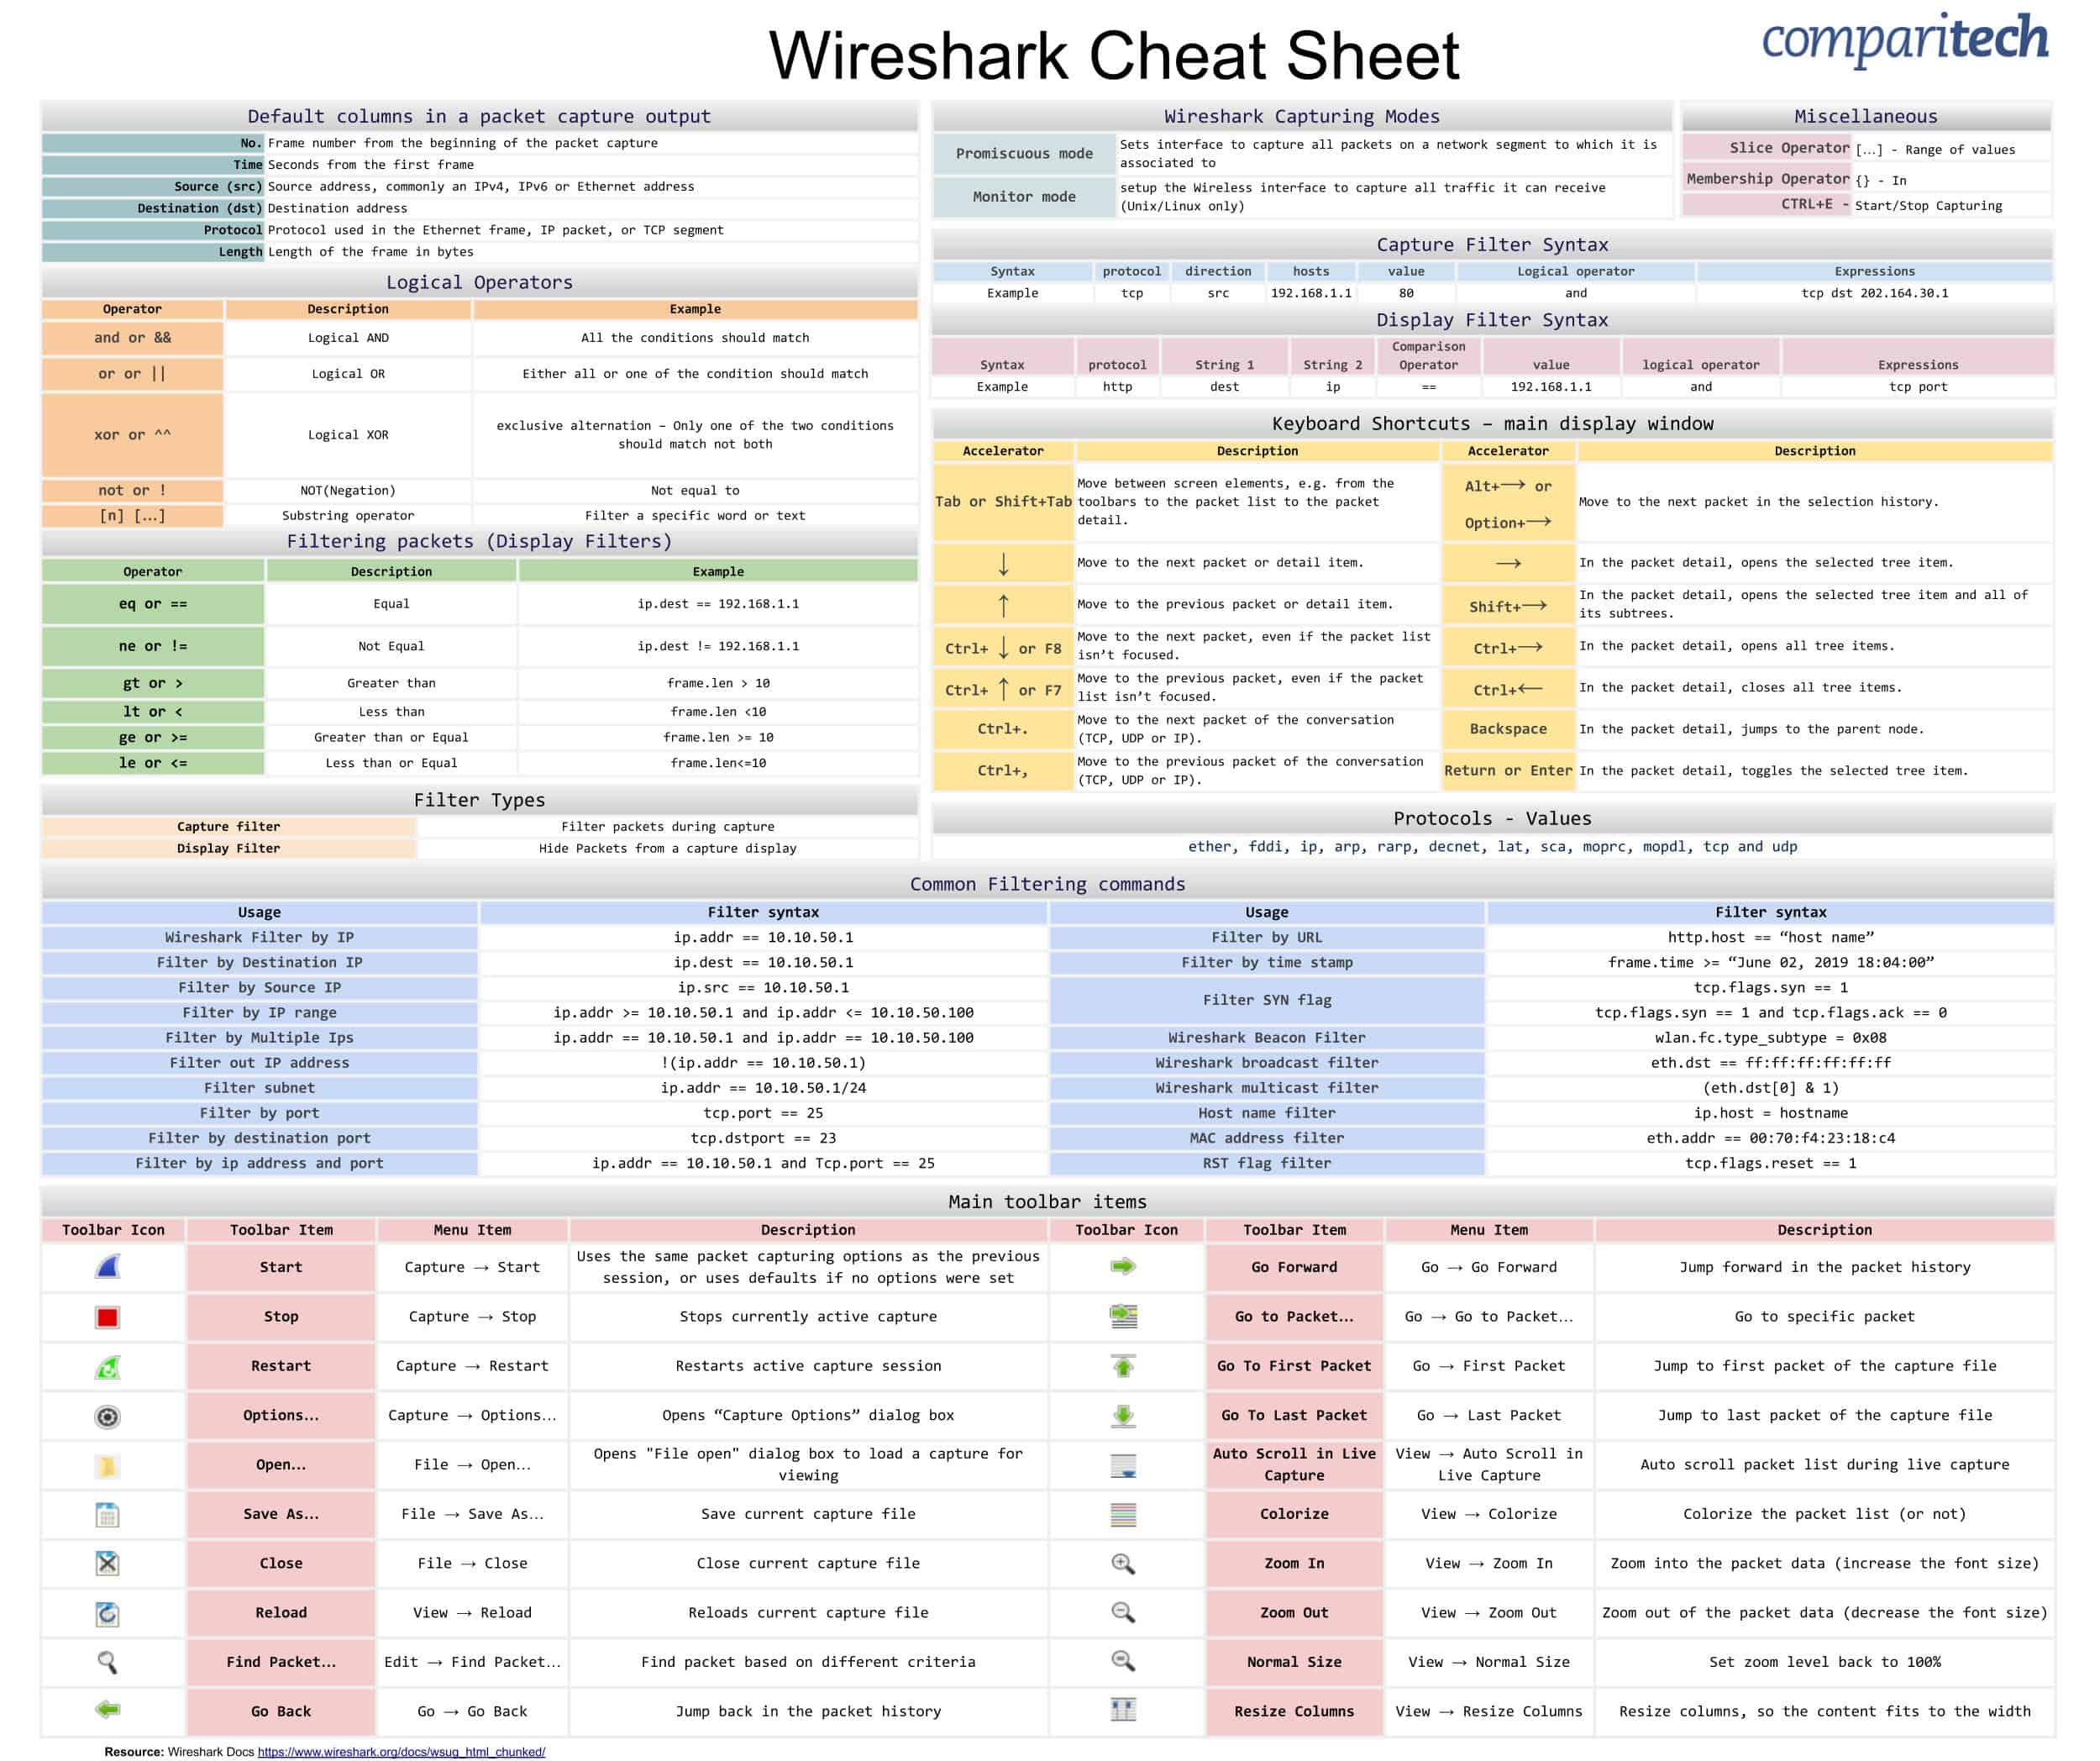 wireshark pcap file analysis online